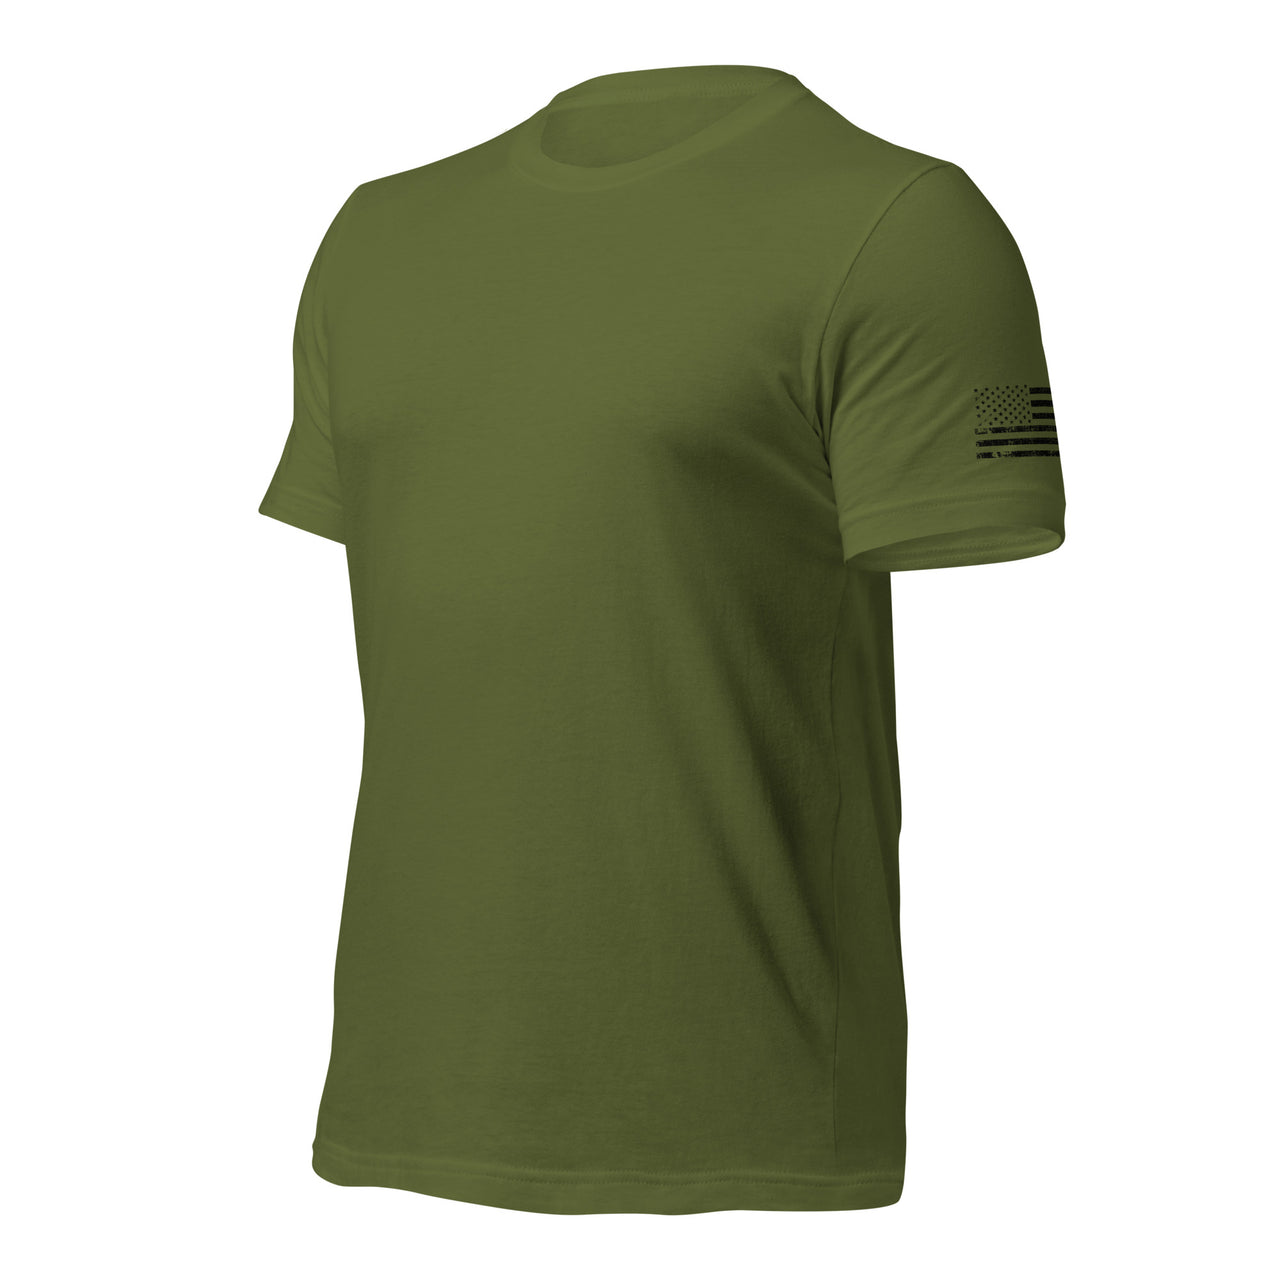 American Flag Sleeve Print T-shirt in Army Green